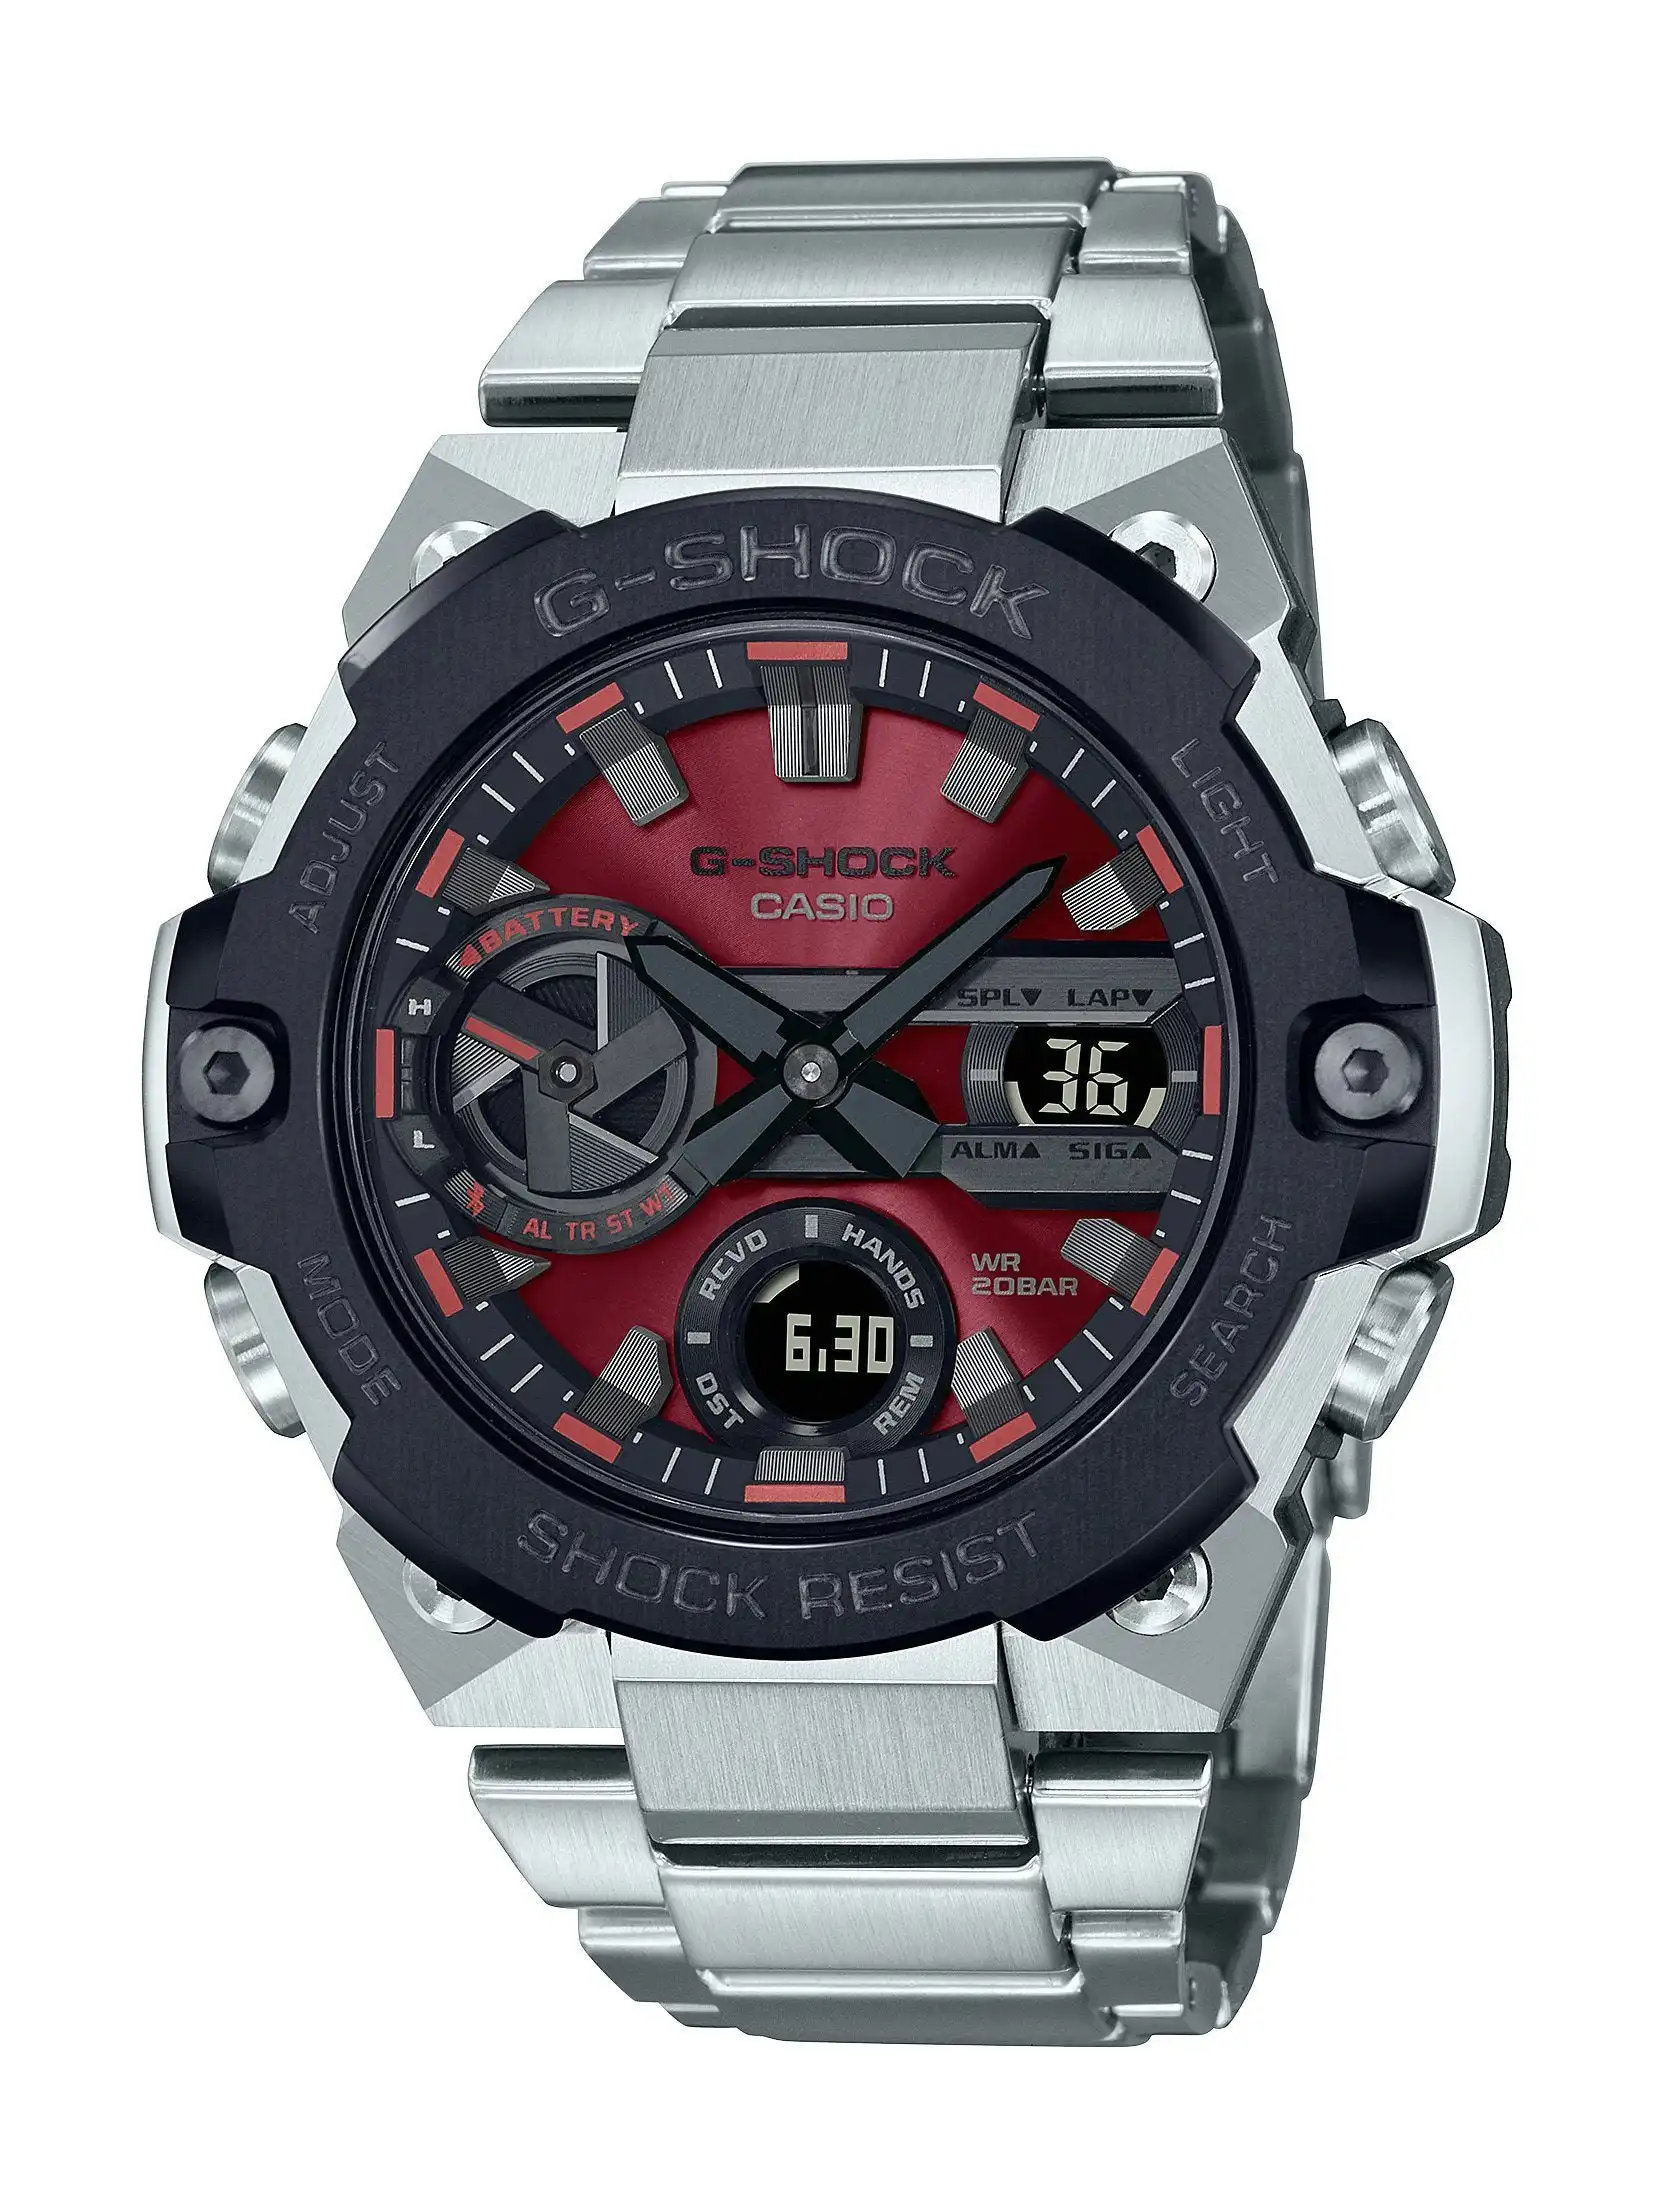 Casio G Shock G Steel Black and Silver Watch GST-B400AD-1A4DR